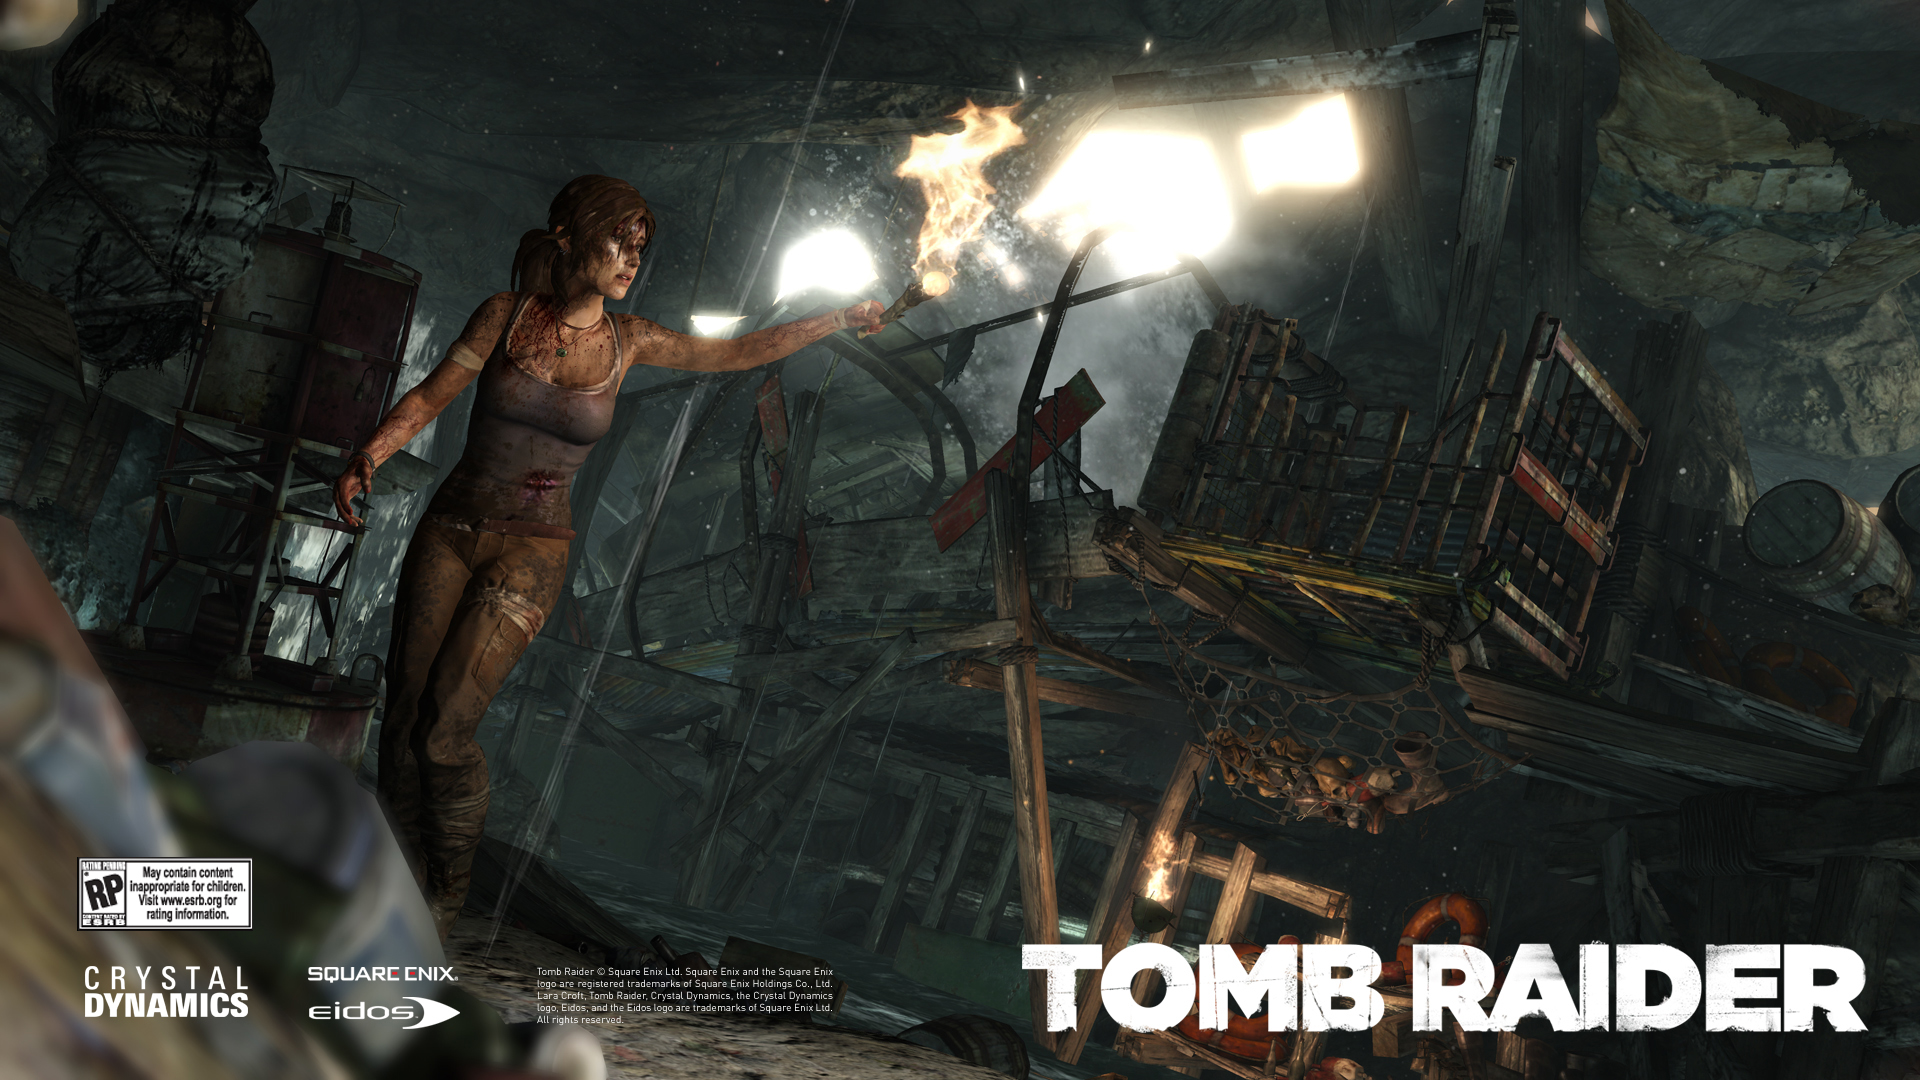 Foton Tomb Raider Tomb Raider 2013 Lara Croft Unga kvinnor spel 600x337 ung kvinna dataspel Datorspel